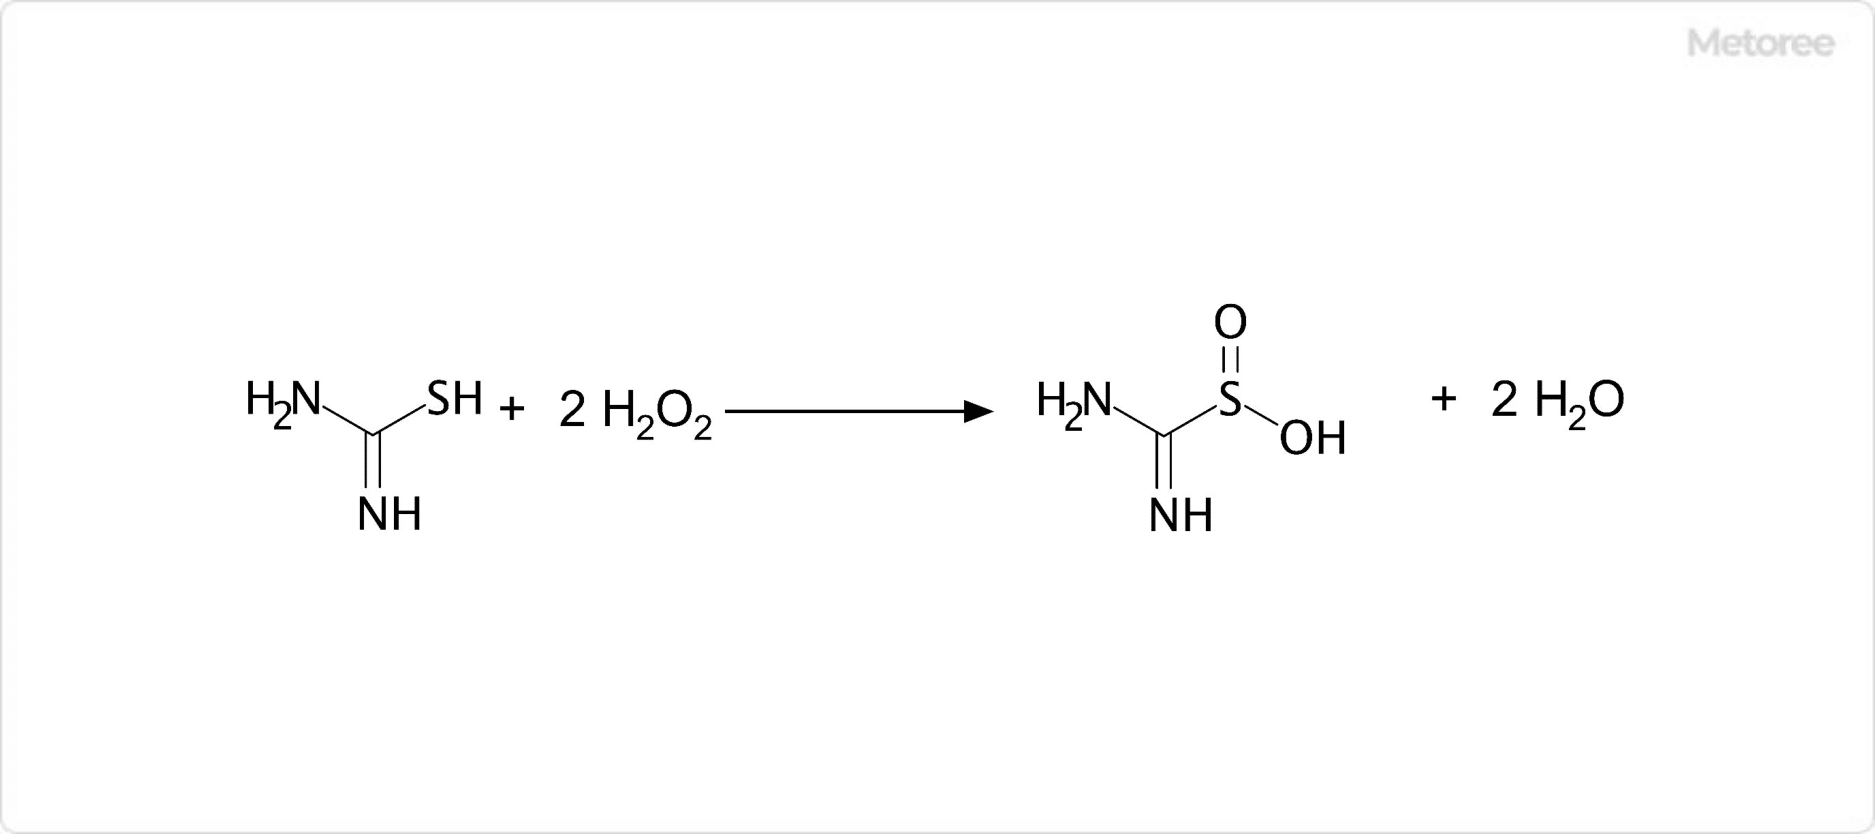 二酸化チオ尿素の合成反応